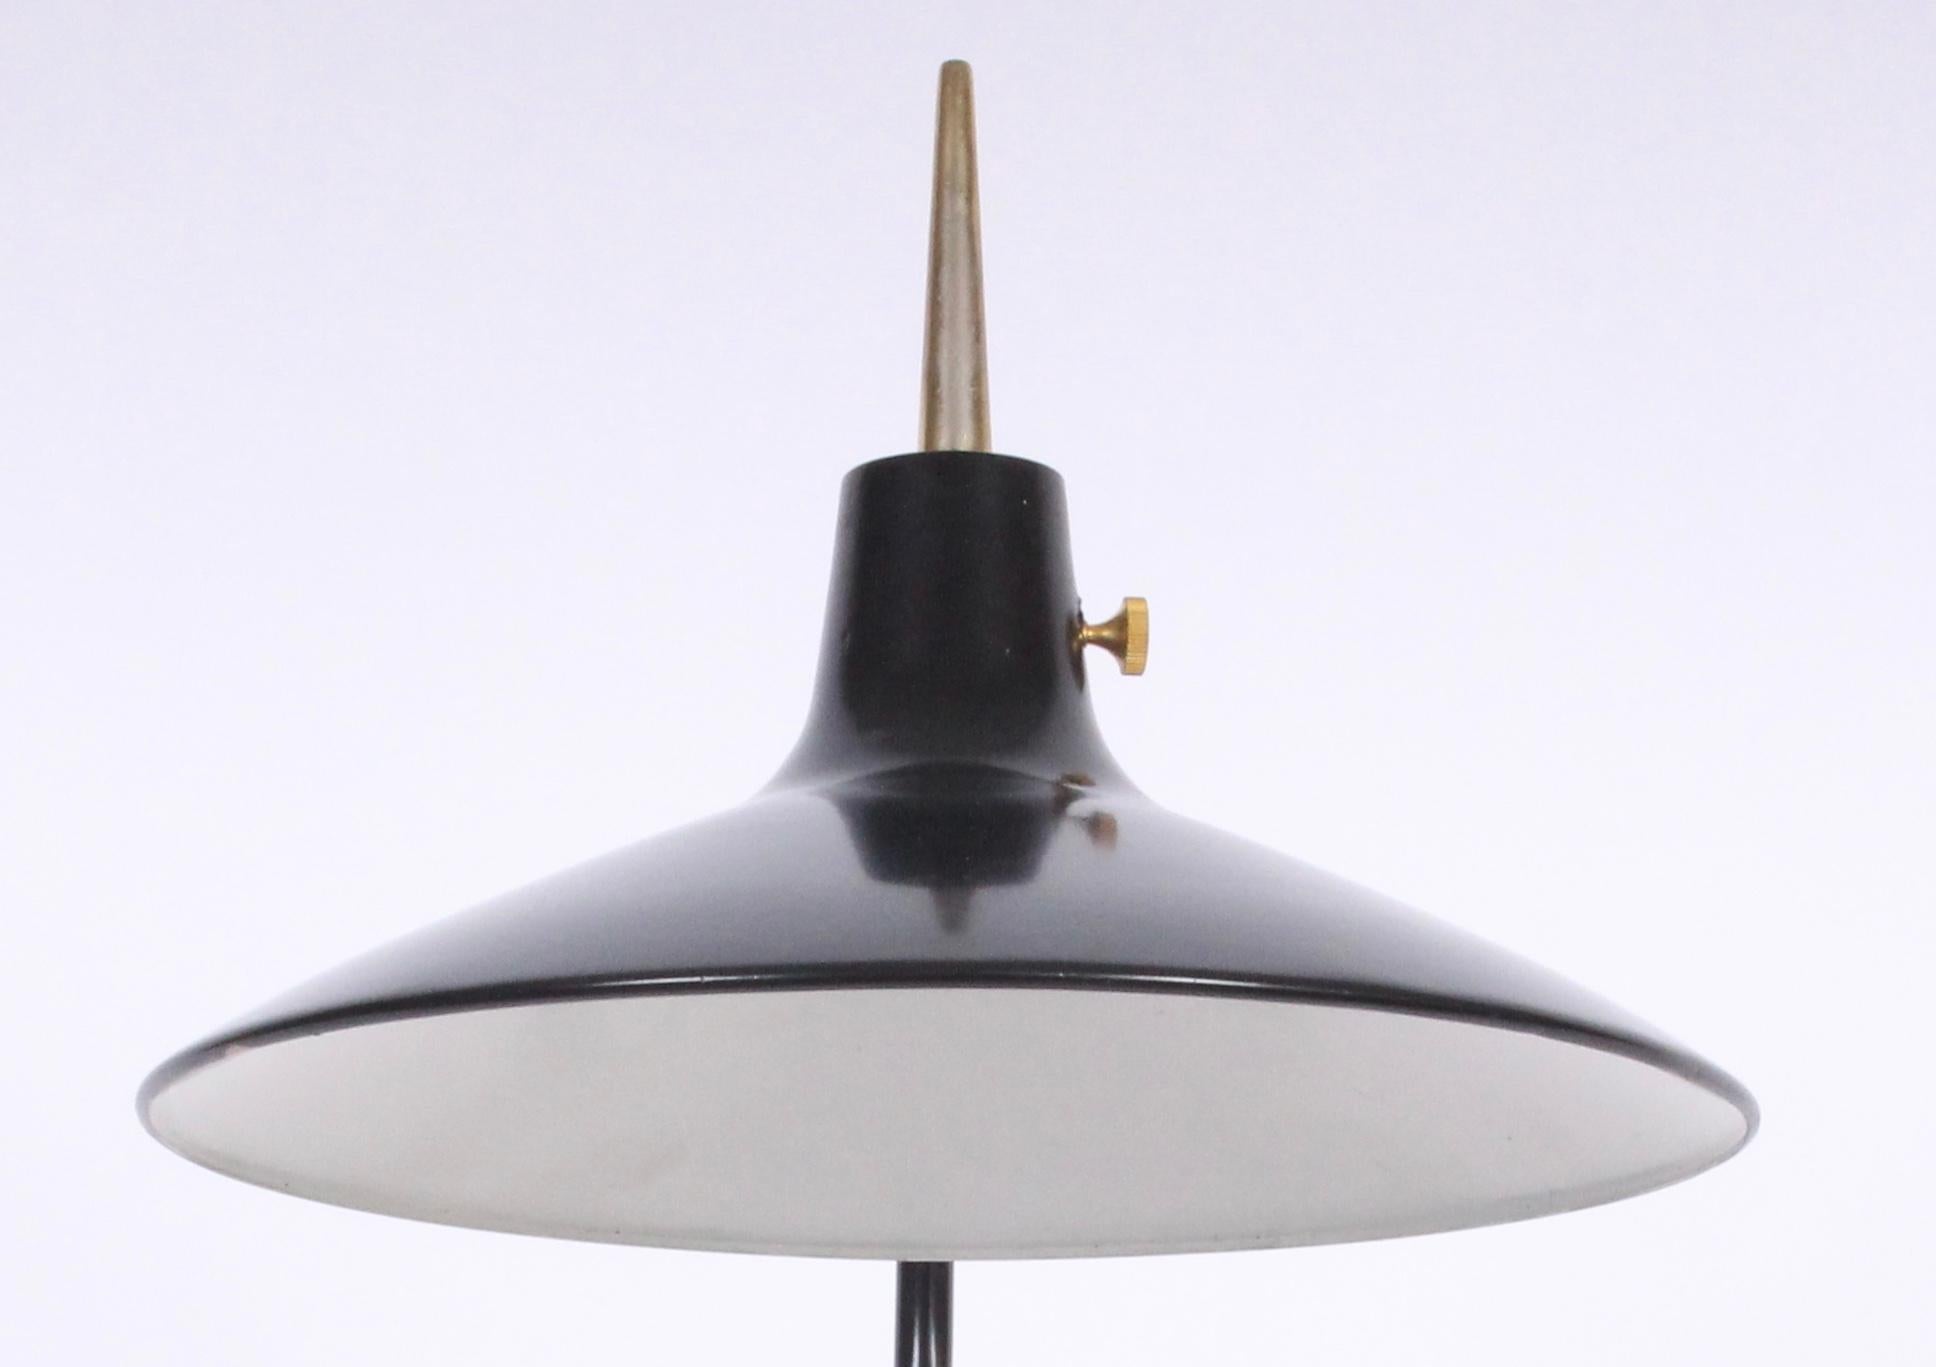 20th Century Laurel Lamp Mfg. Co. Black and Brass Desk Lamp with Black Enamel Shade